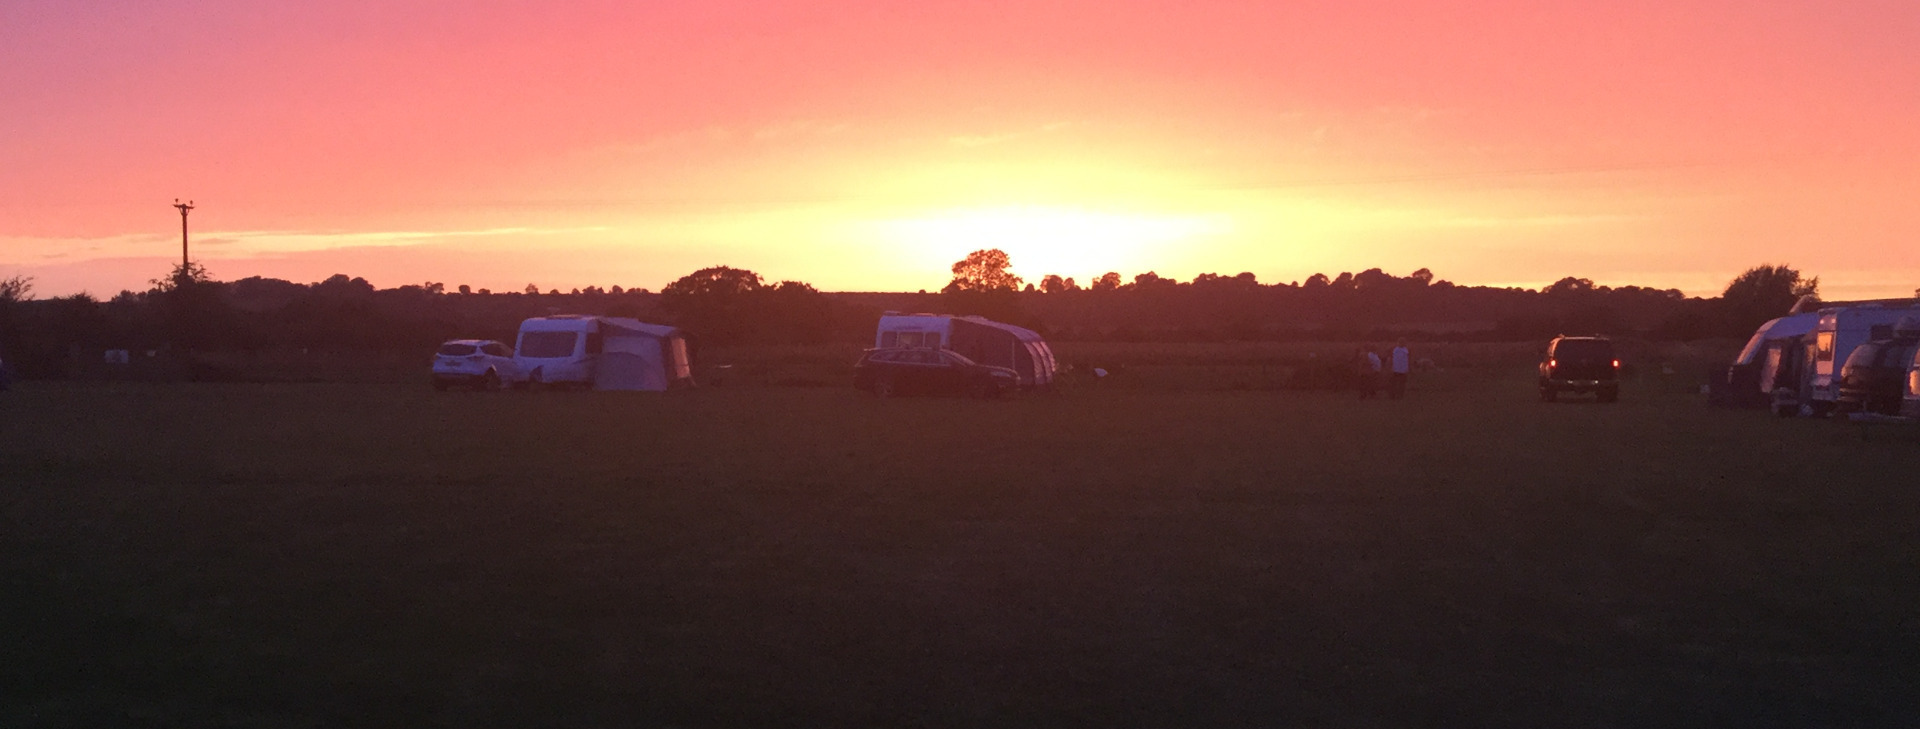 Sunset over the caravan park